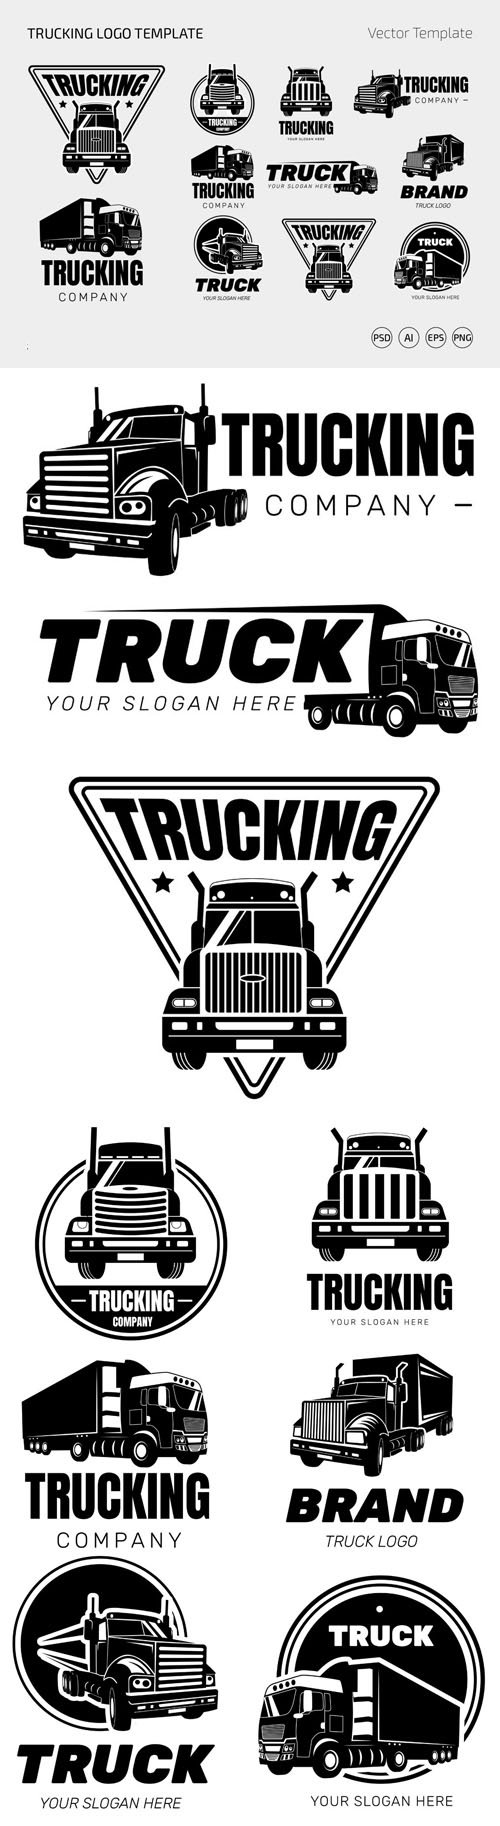 9 Trucking Logo Templates for Illustrator & Photoshop